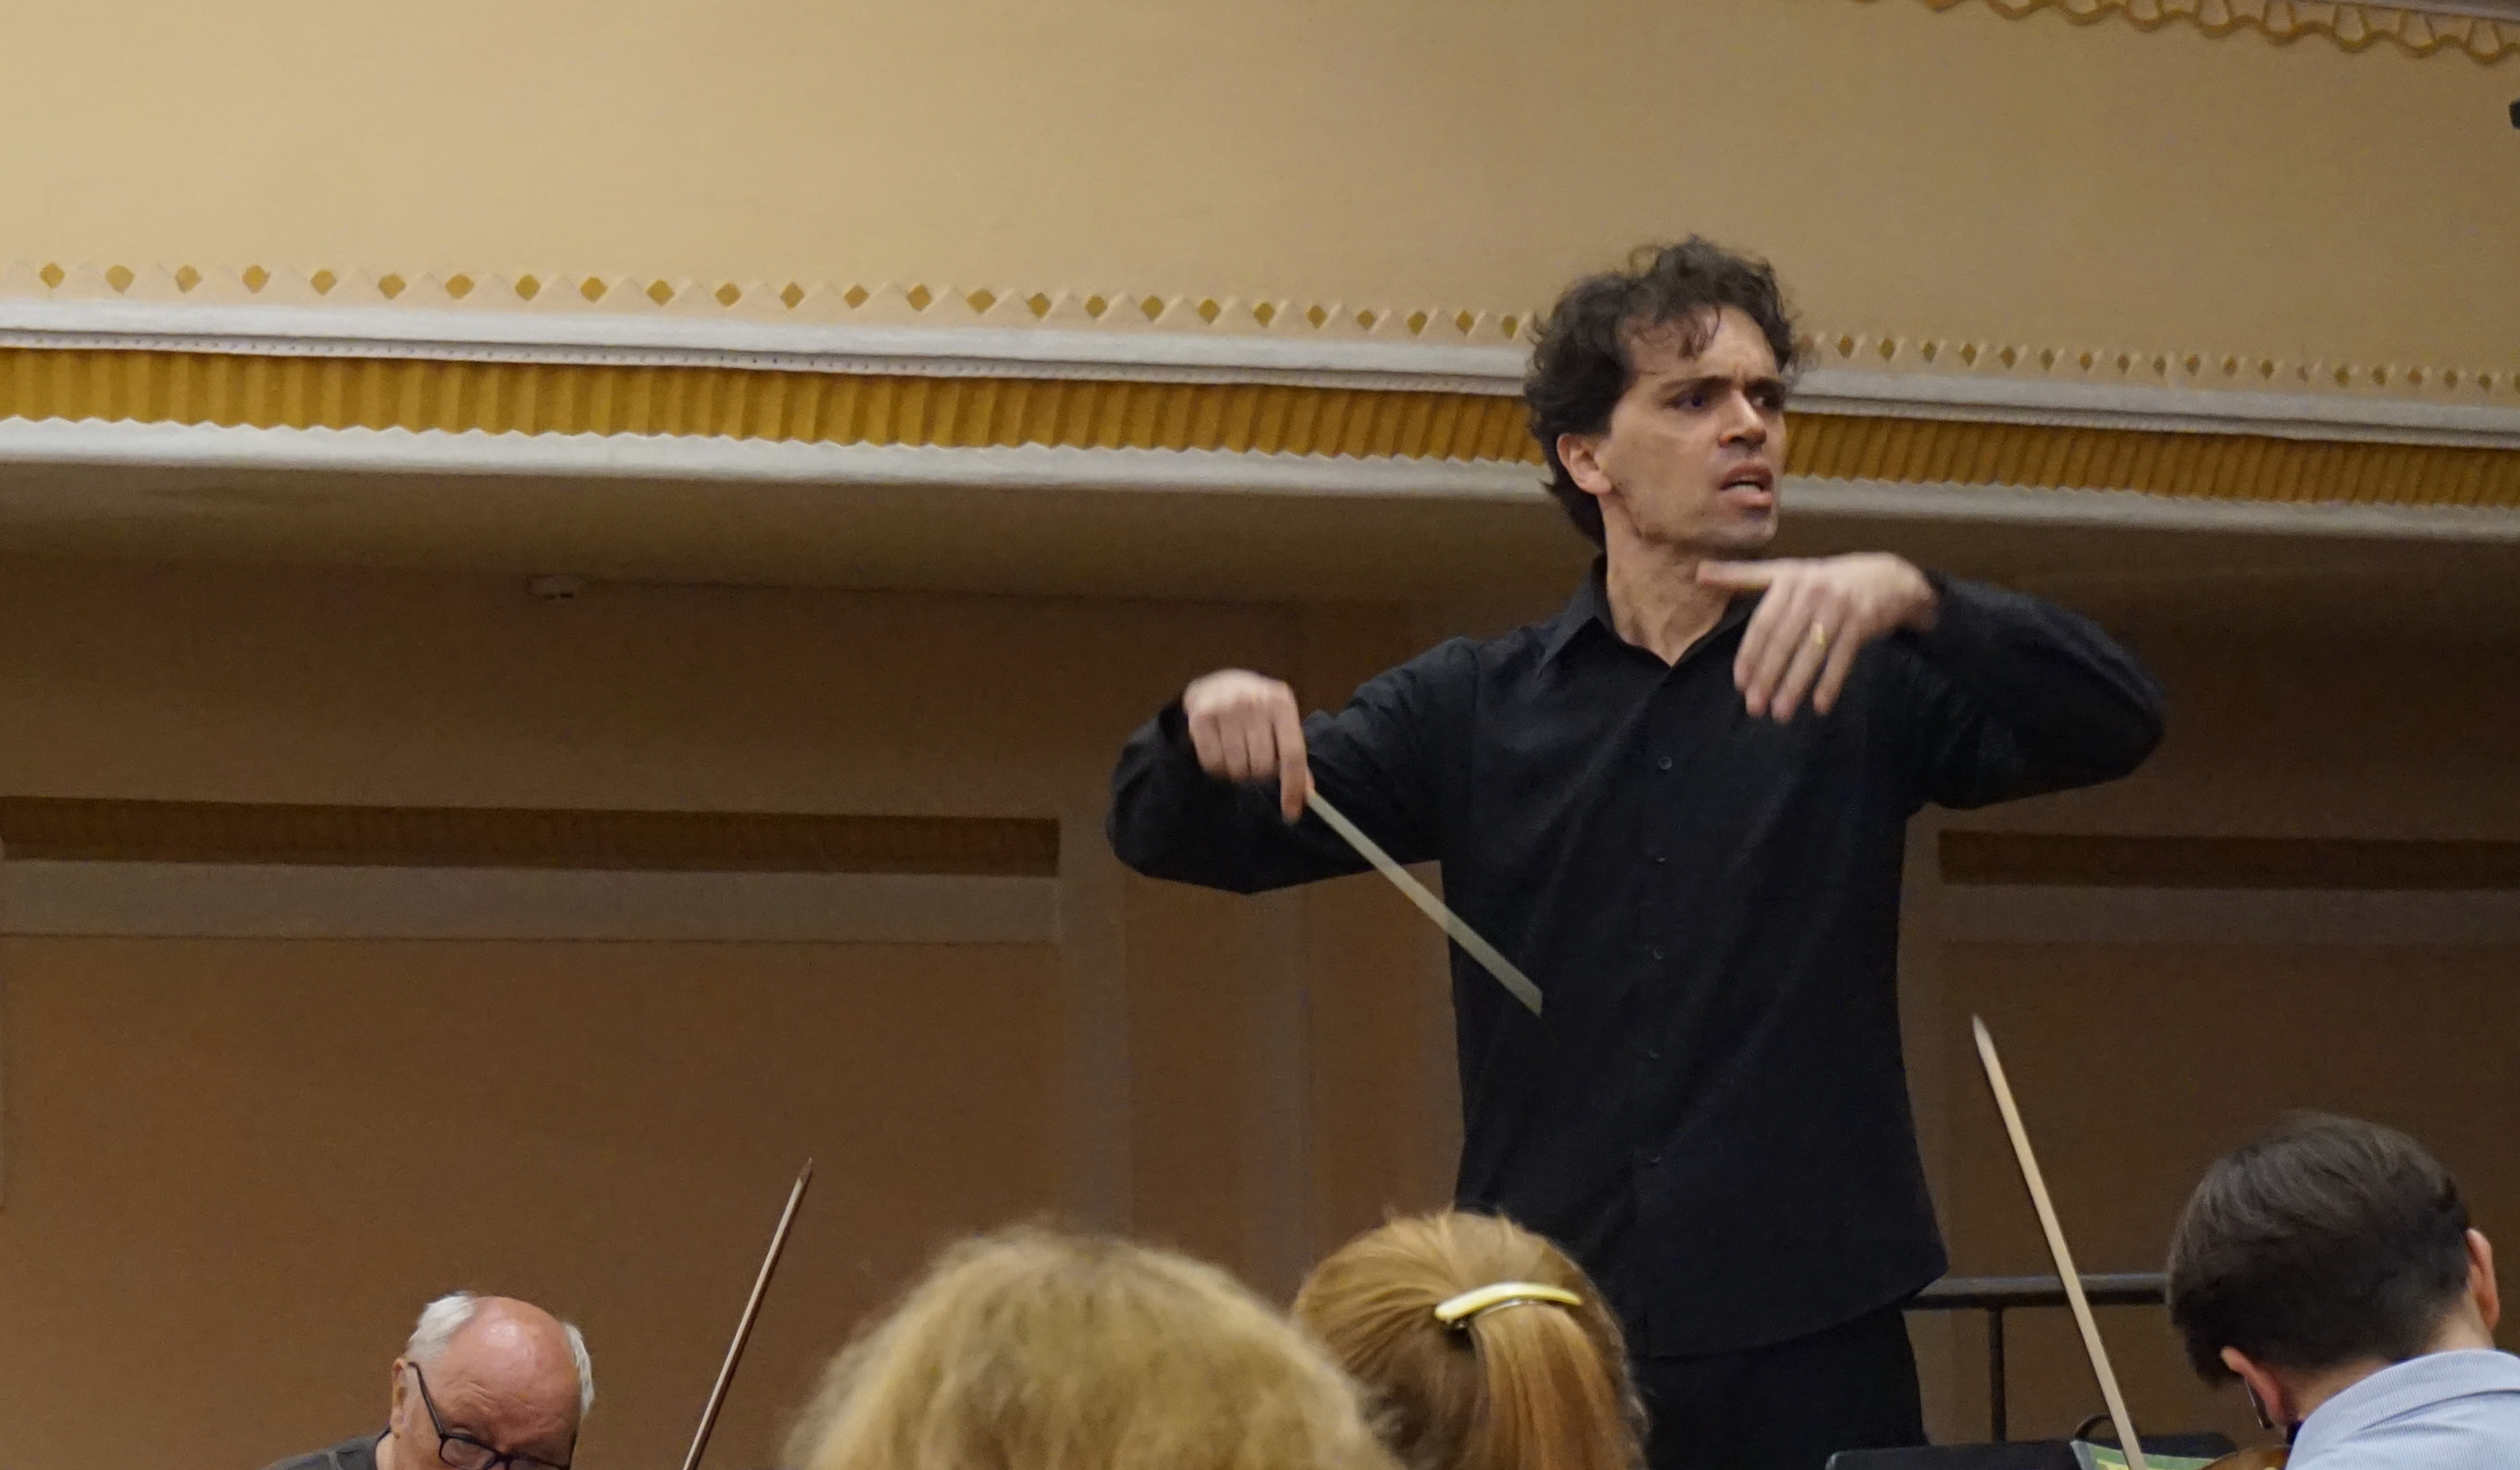 Daniel Padua, conductor